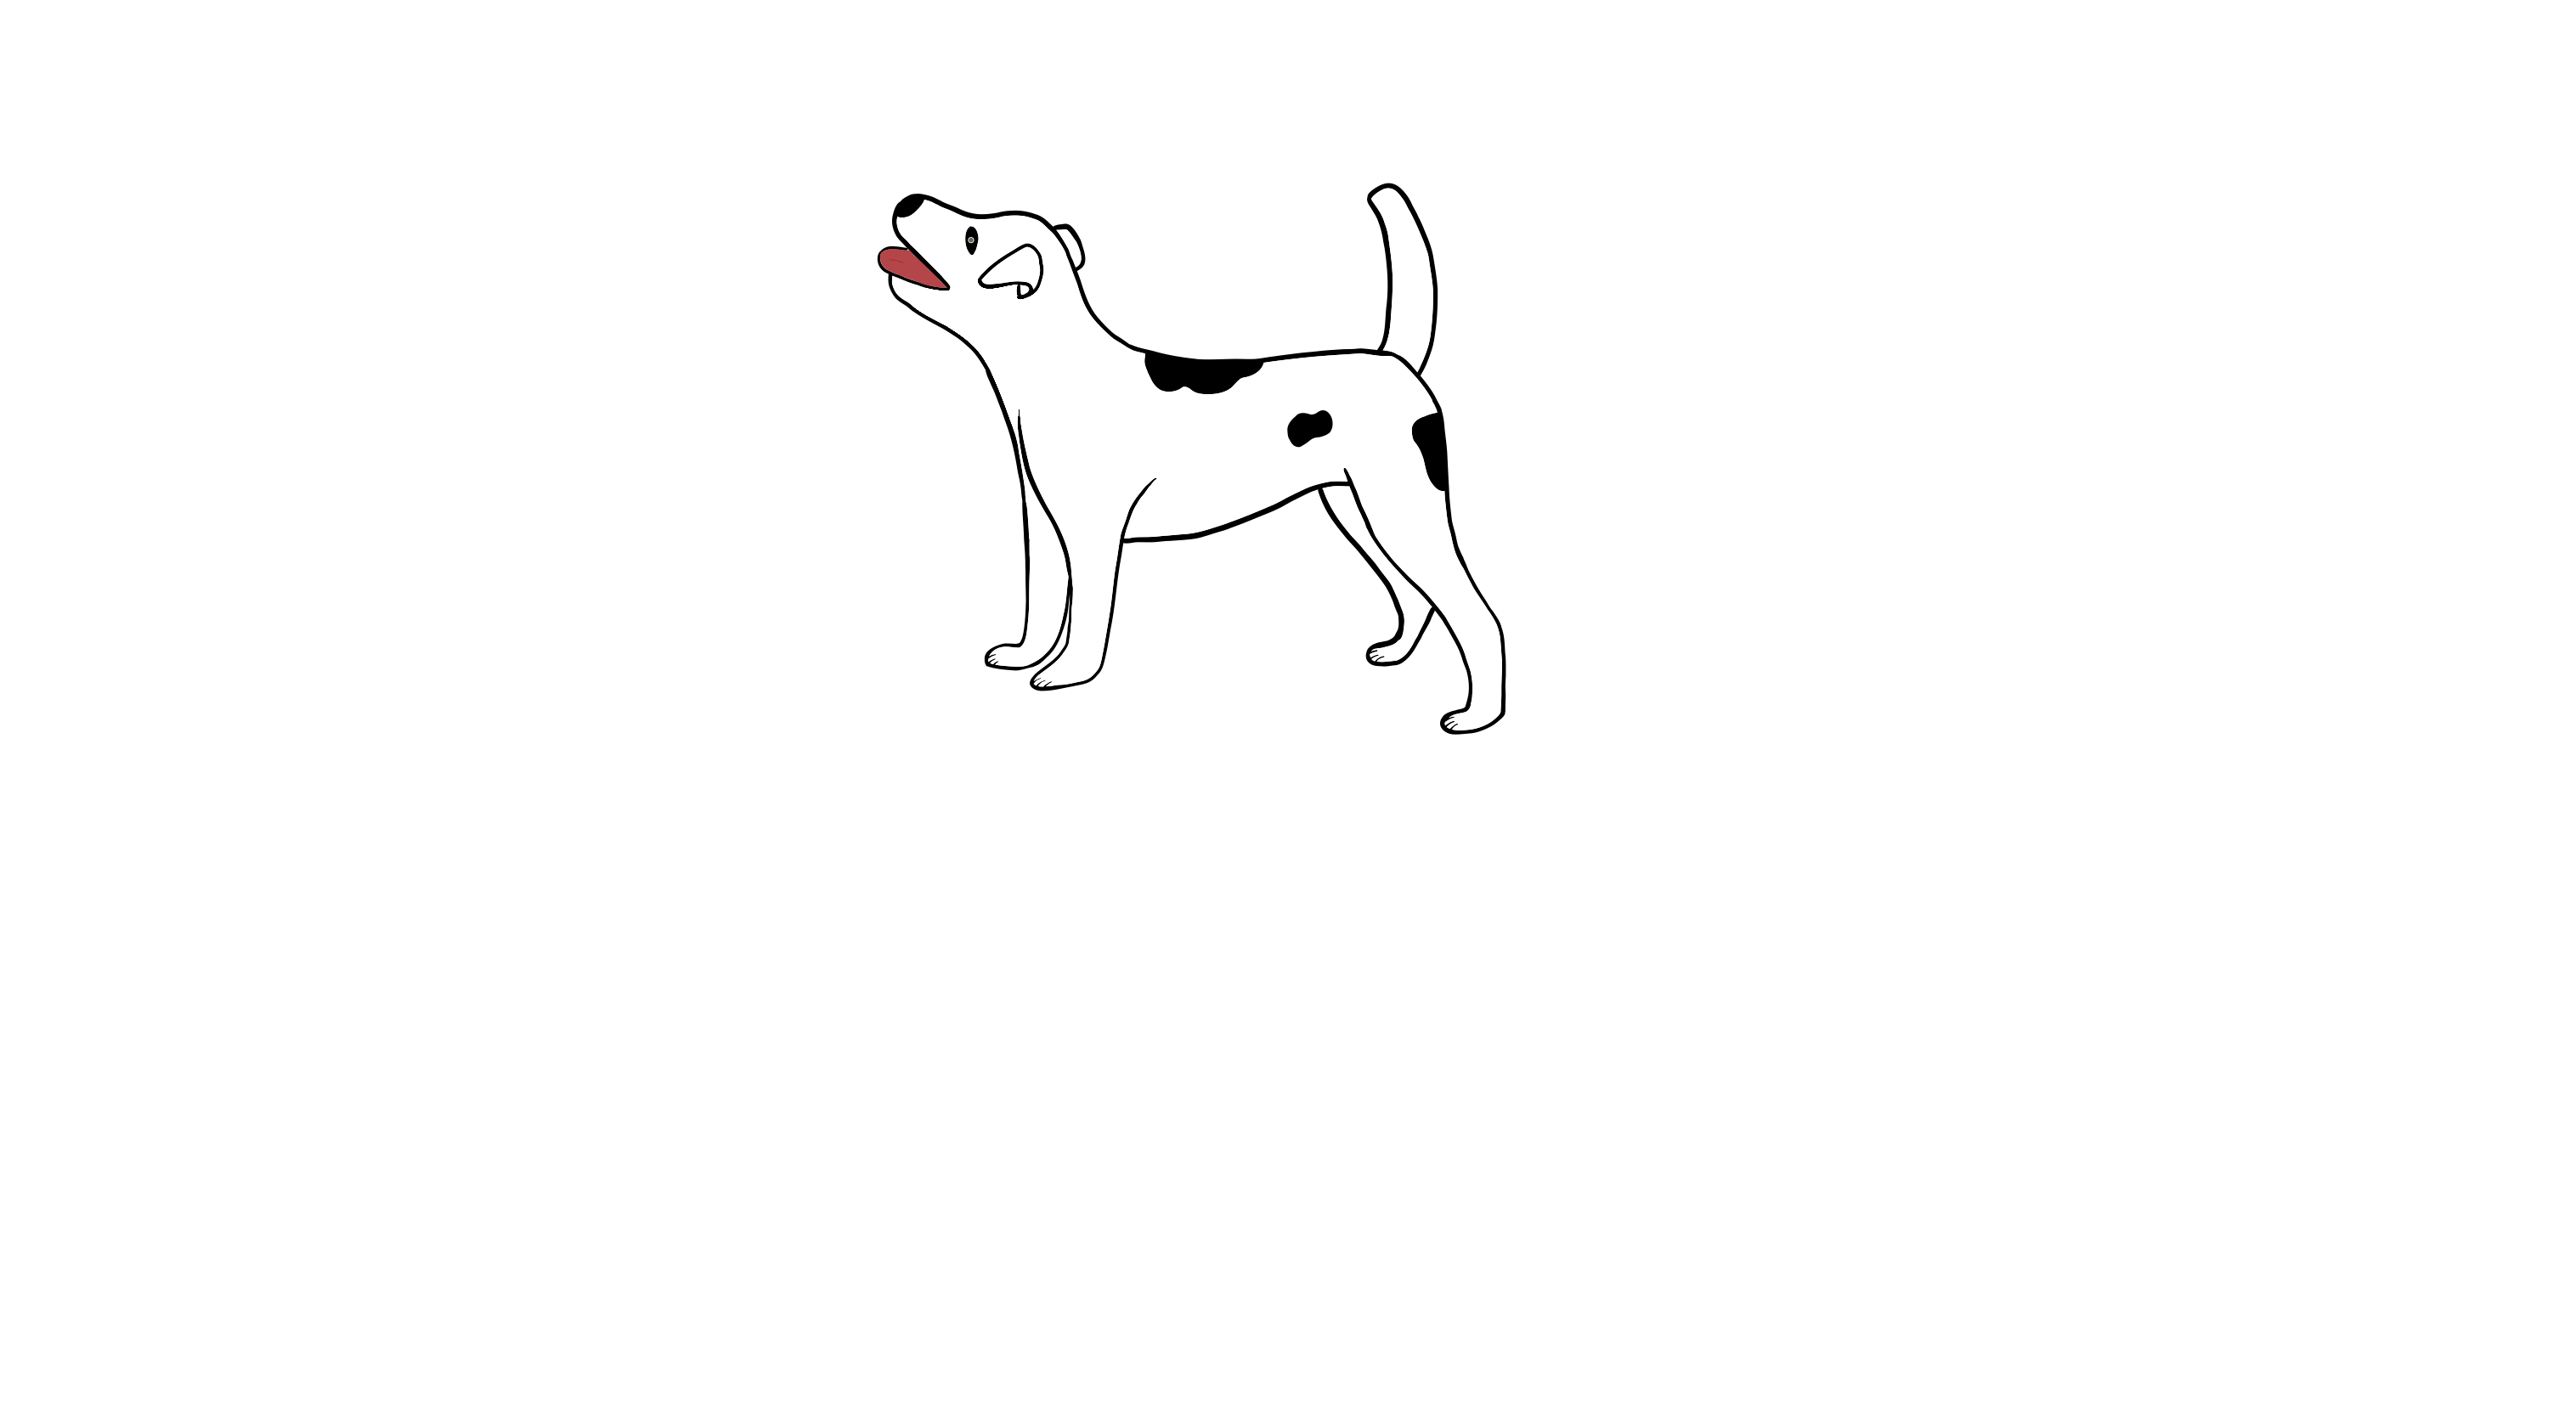 Dancing Diamonds Dogs